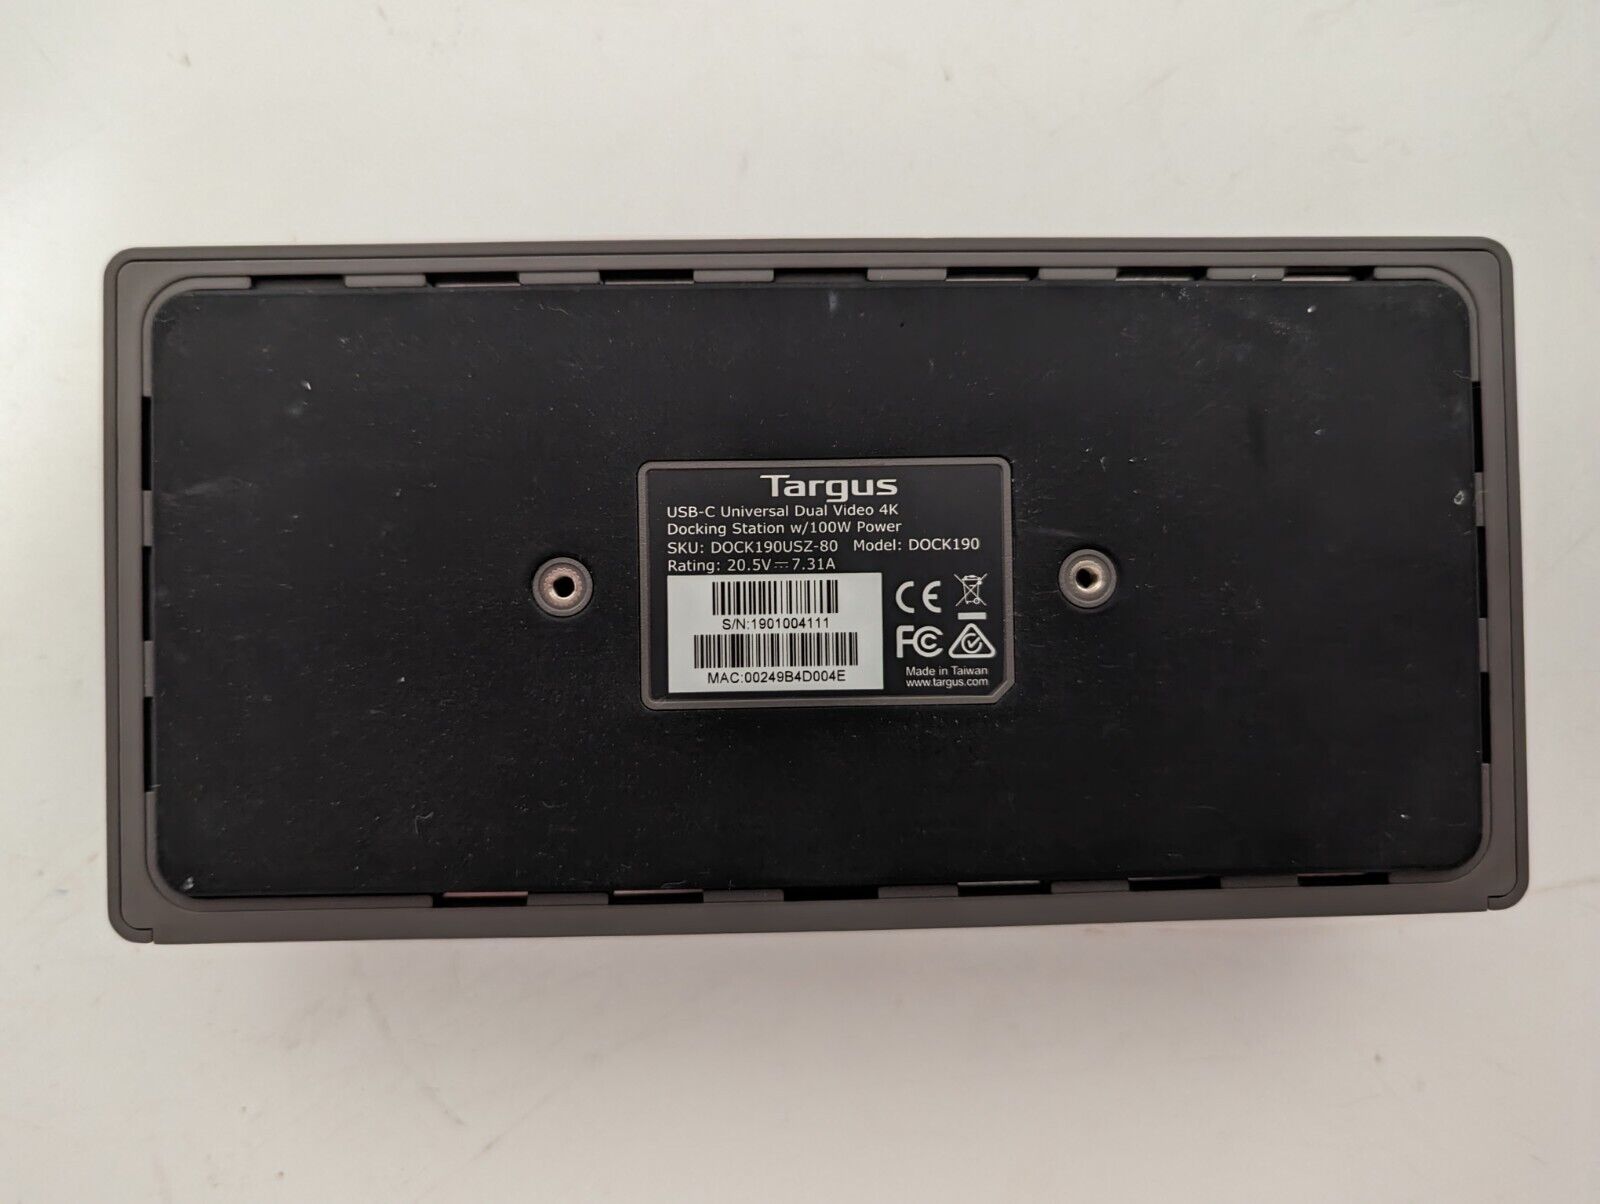 Targus Dock 190 USB-C Universal DV4K Docking Station with power adapter 